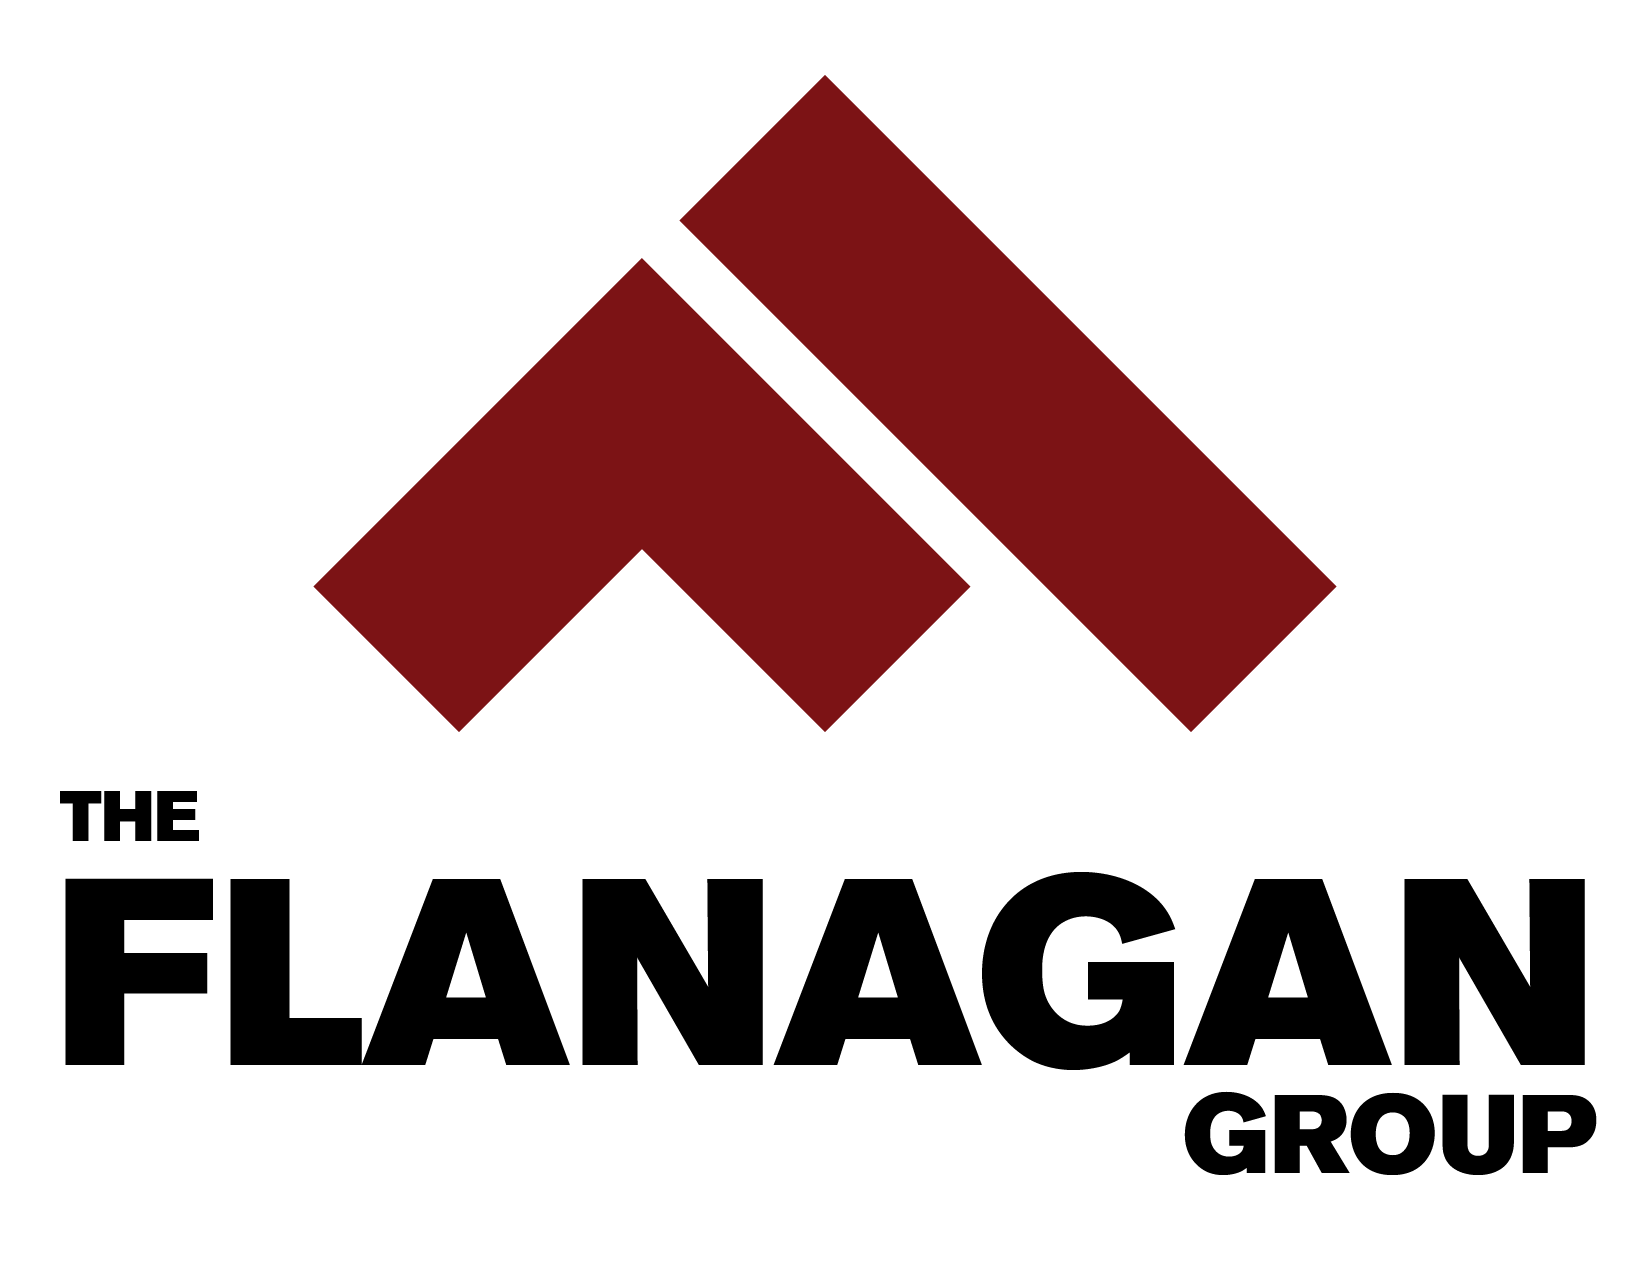 Flanagan Logo - The Flanagan Group | About The Flanagan Group